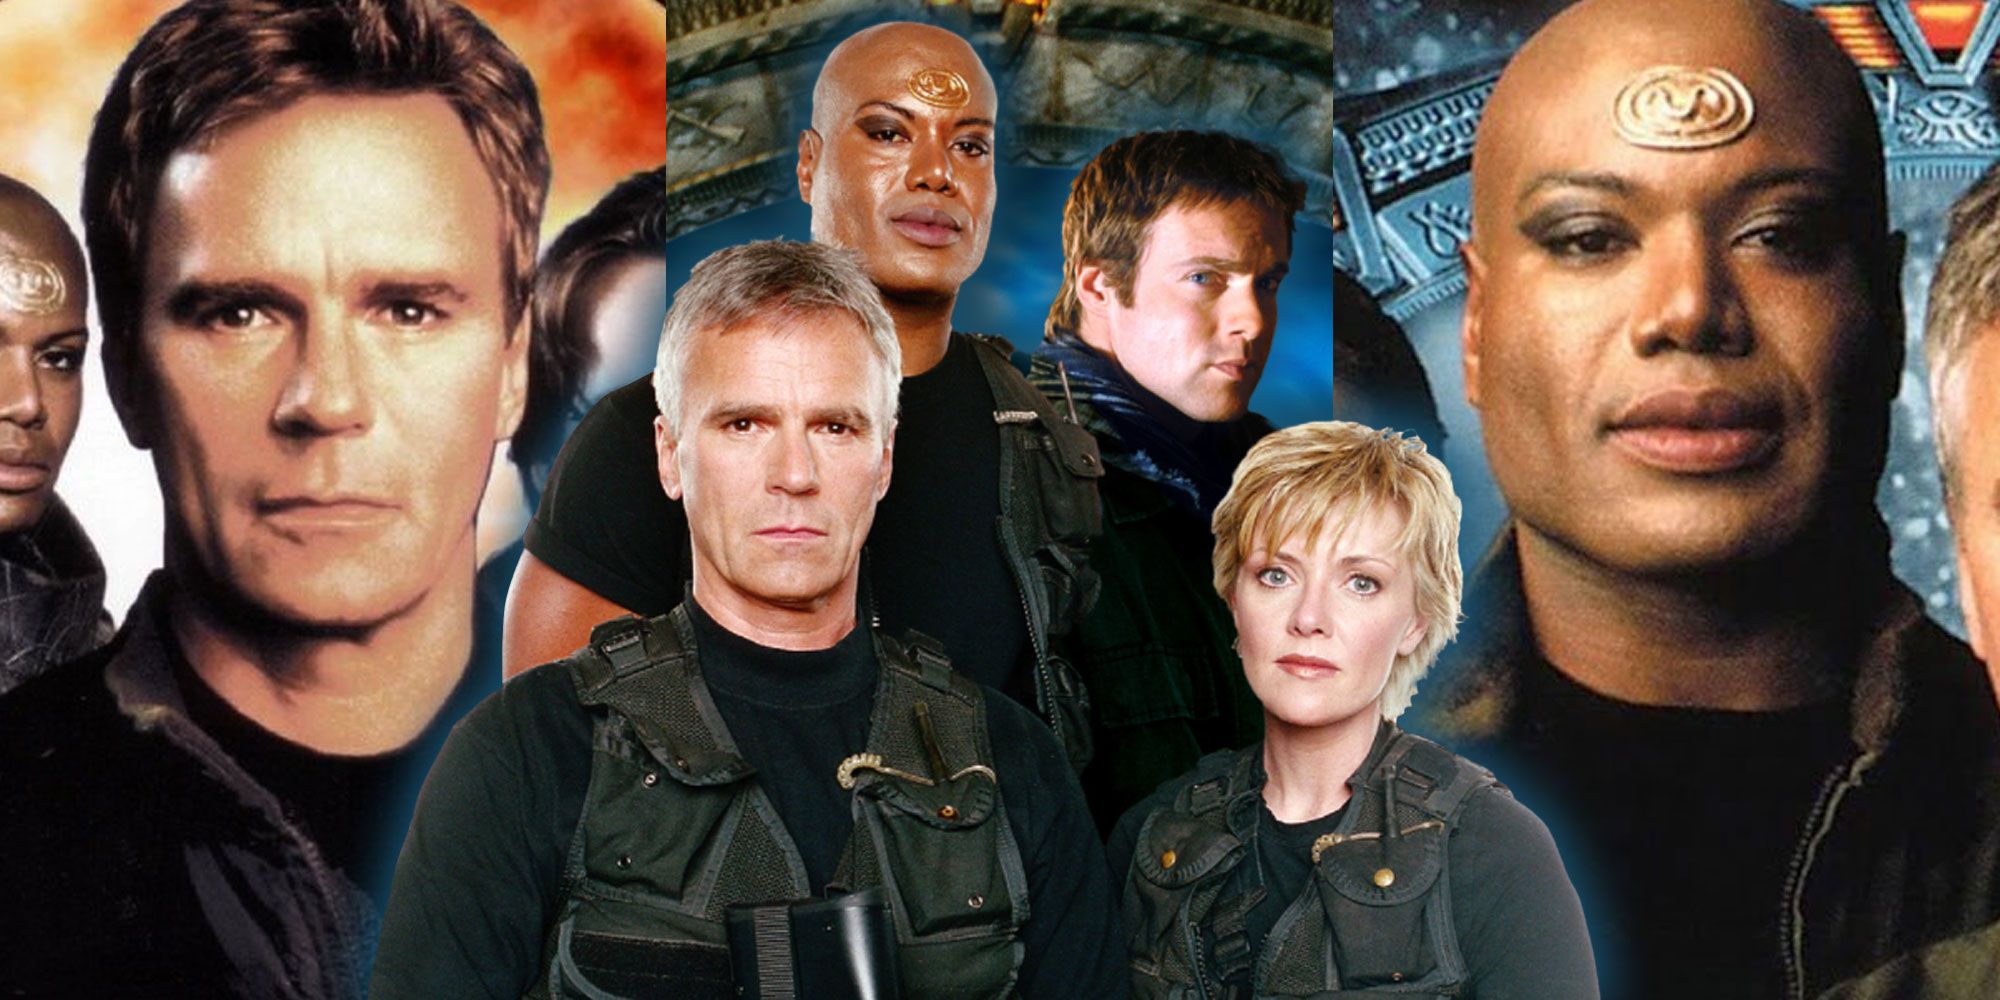 The crew of Stargate SG-1